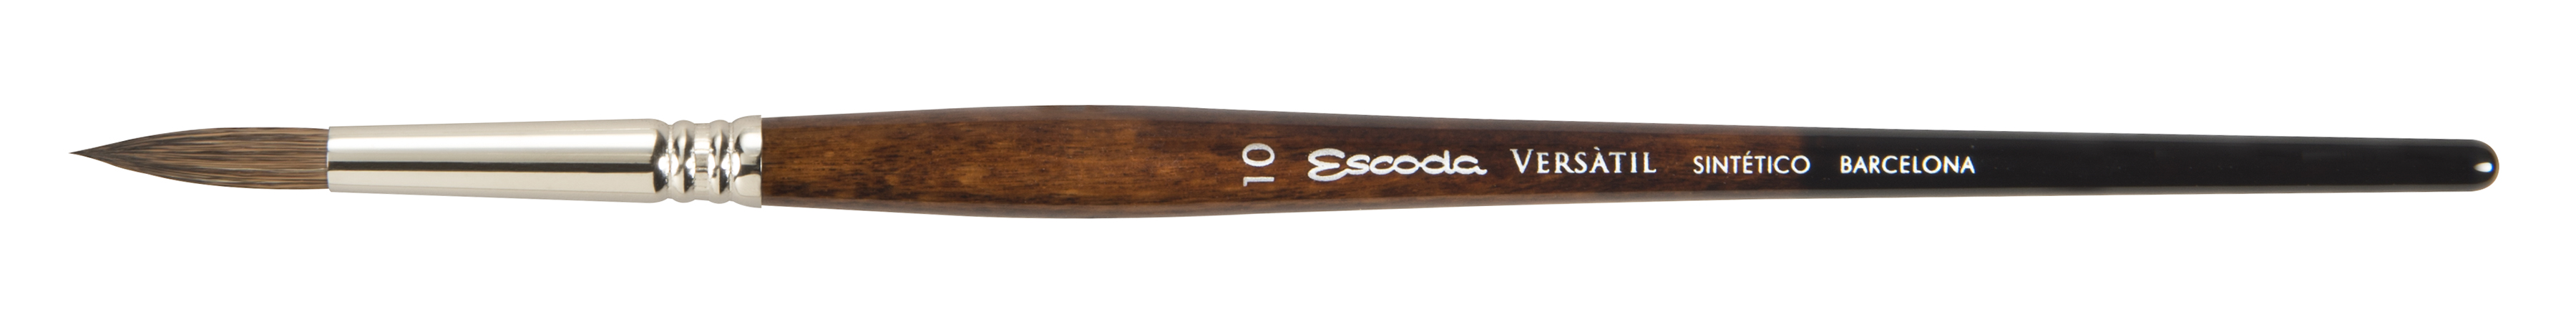 Escoda Versatil Brush - Travel Round, Size 12, Short Handle